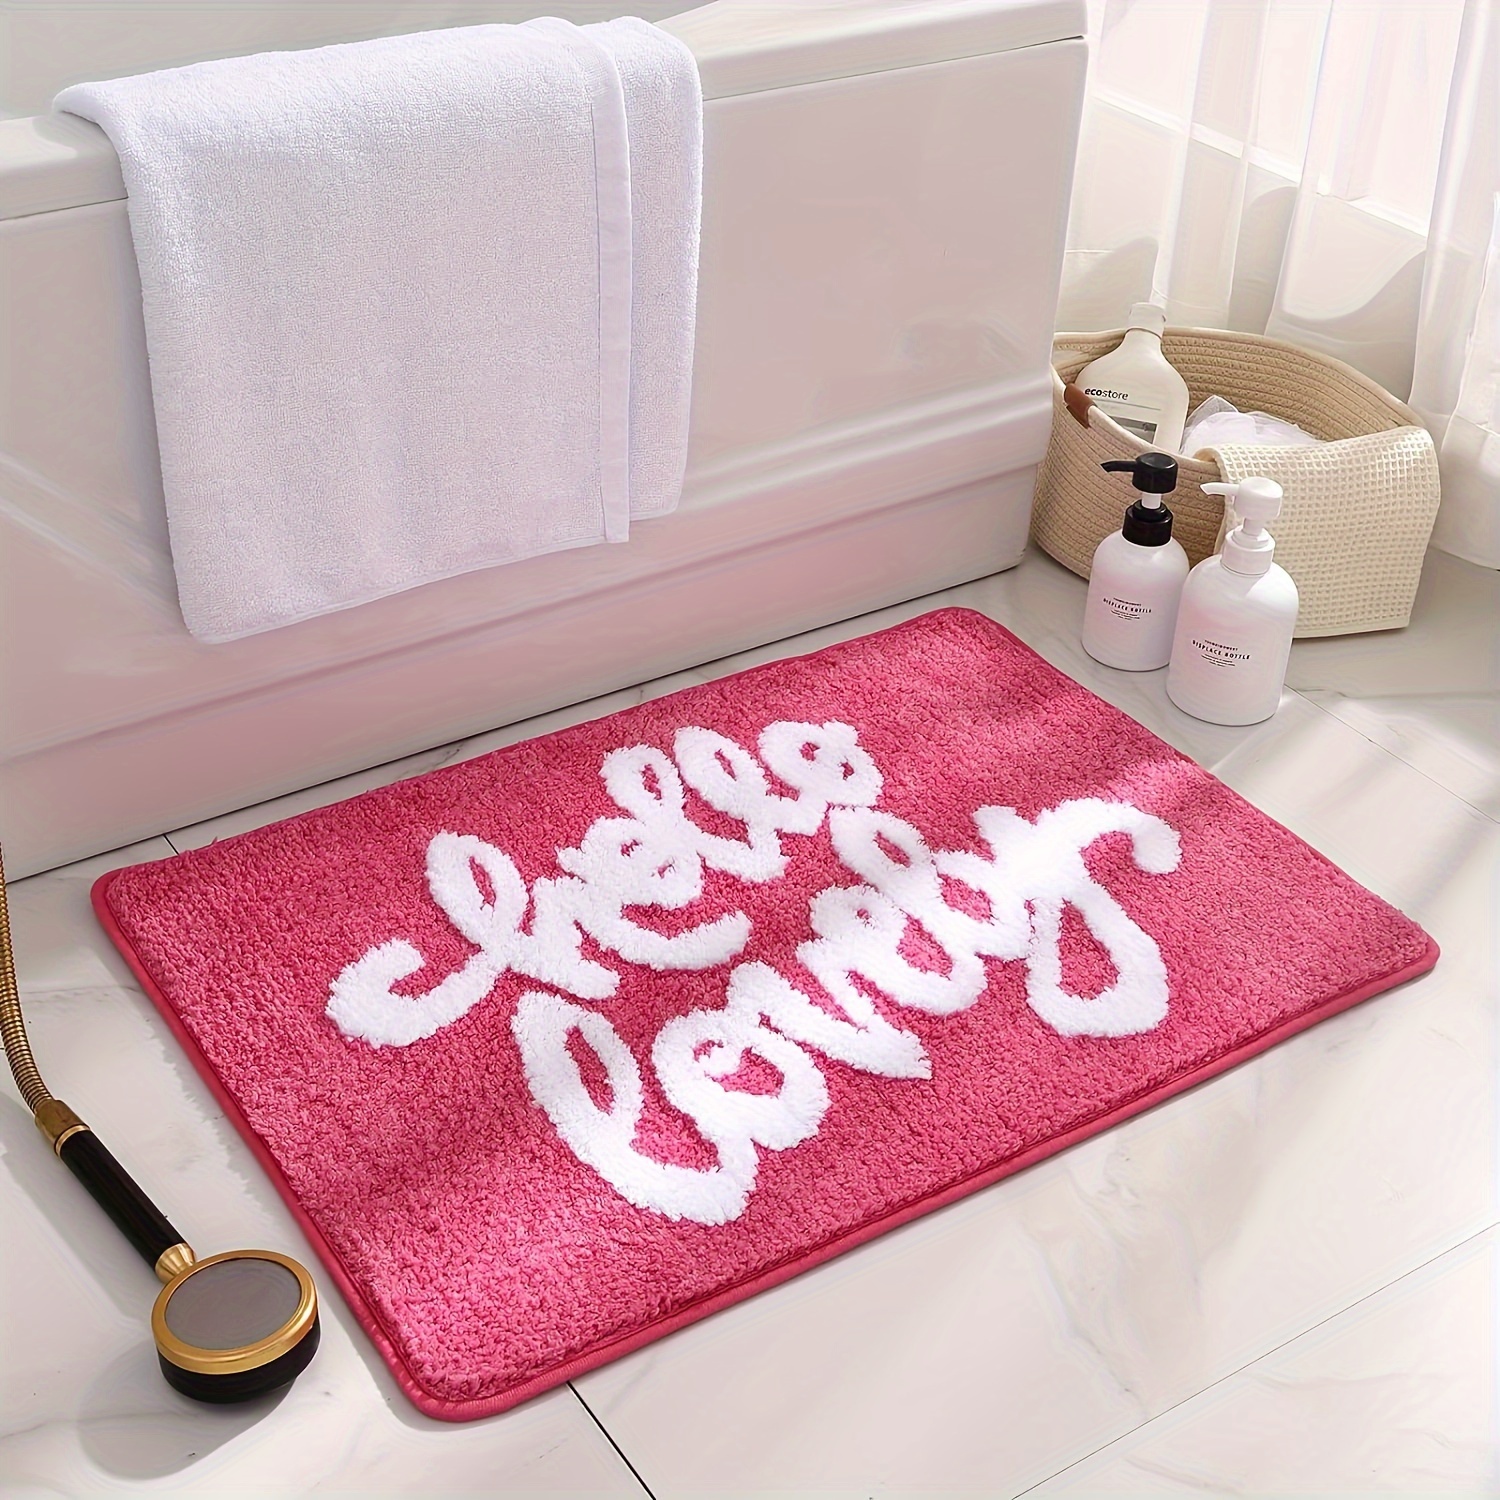 

1pc Hello Lovely Bath Mat, Soft Shaggy Absorbent, Machine Washable, Non-slip Door Mat For Bathroom, Bathroom Decor (19.6x28.3 Inches)